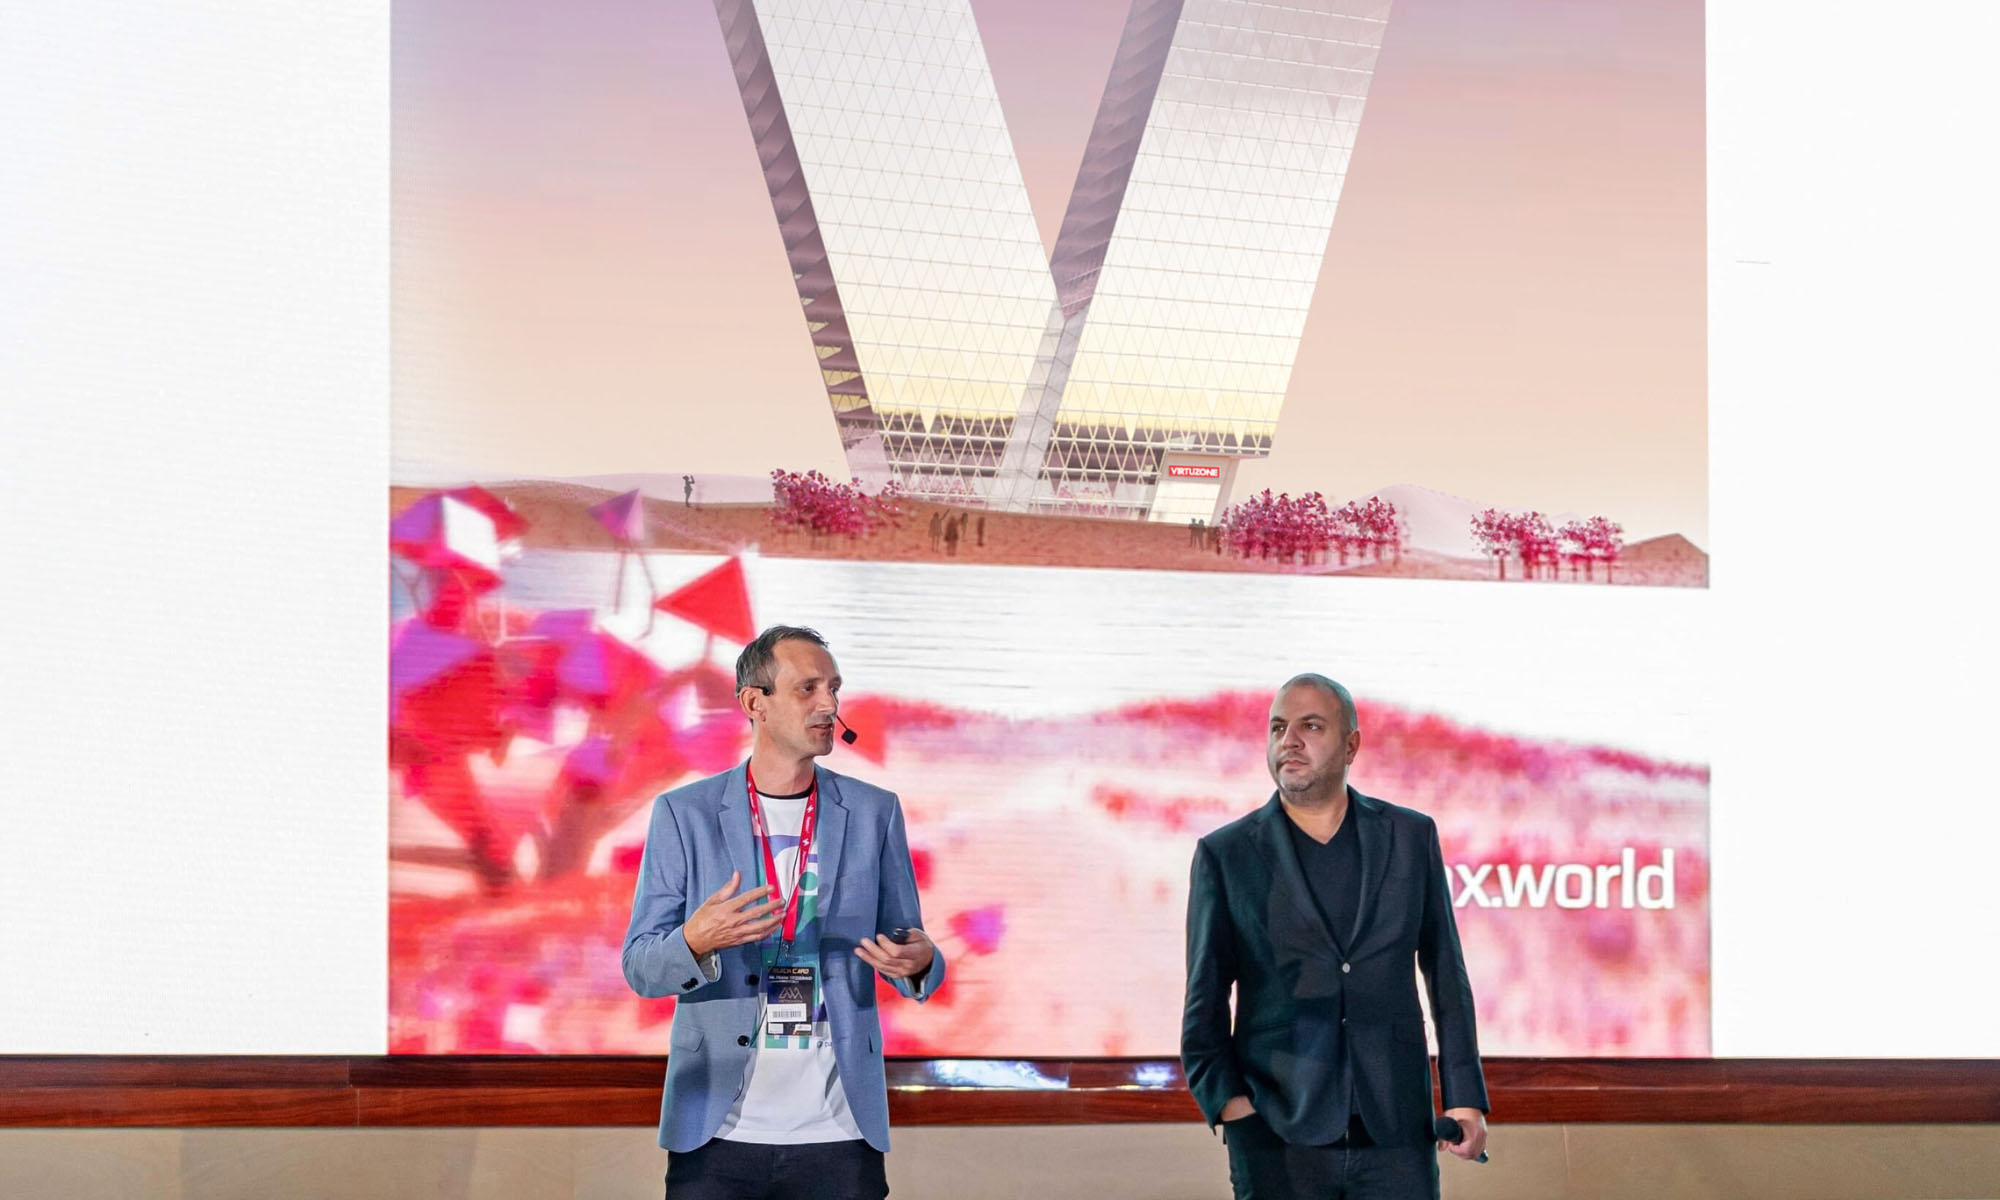 virtuzone partnership with pax.world to build v-shaped metaverse skyscraper